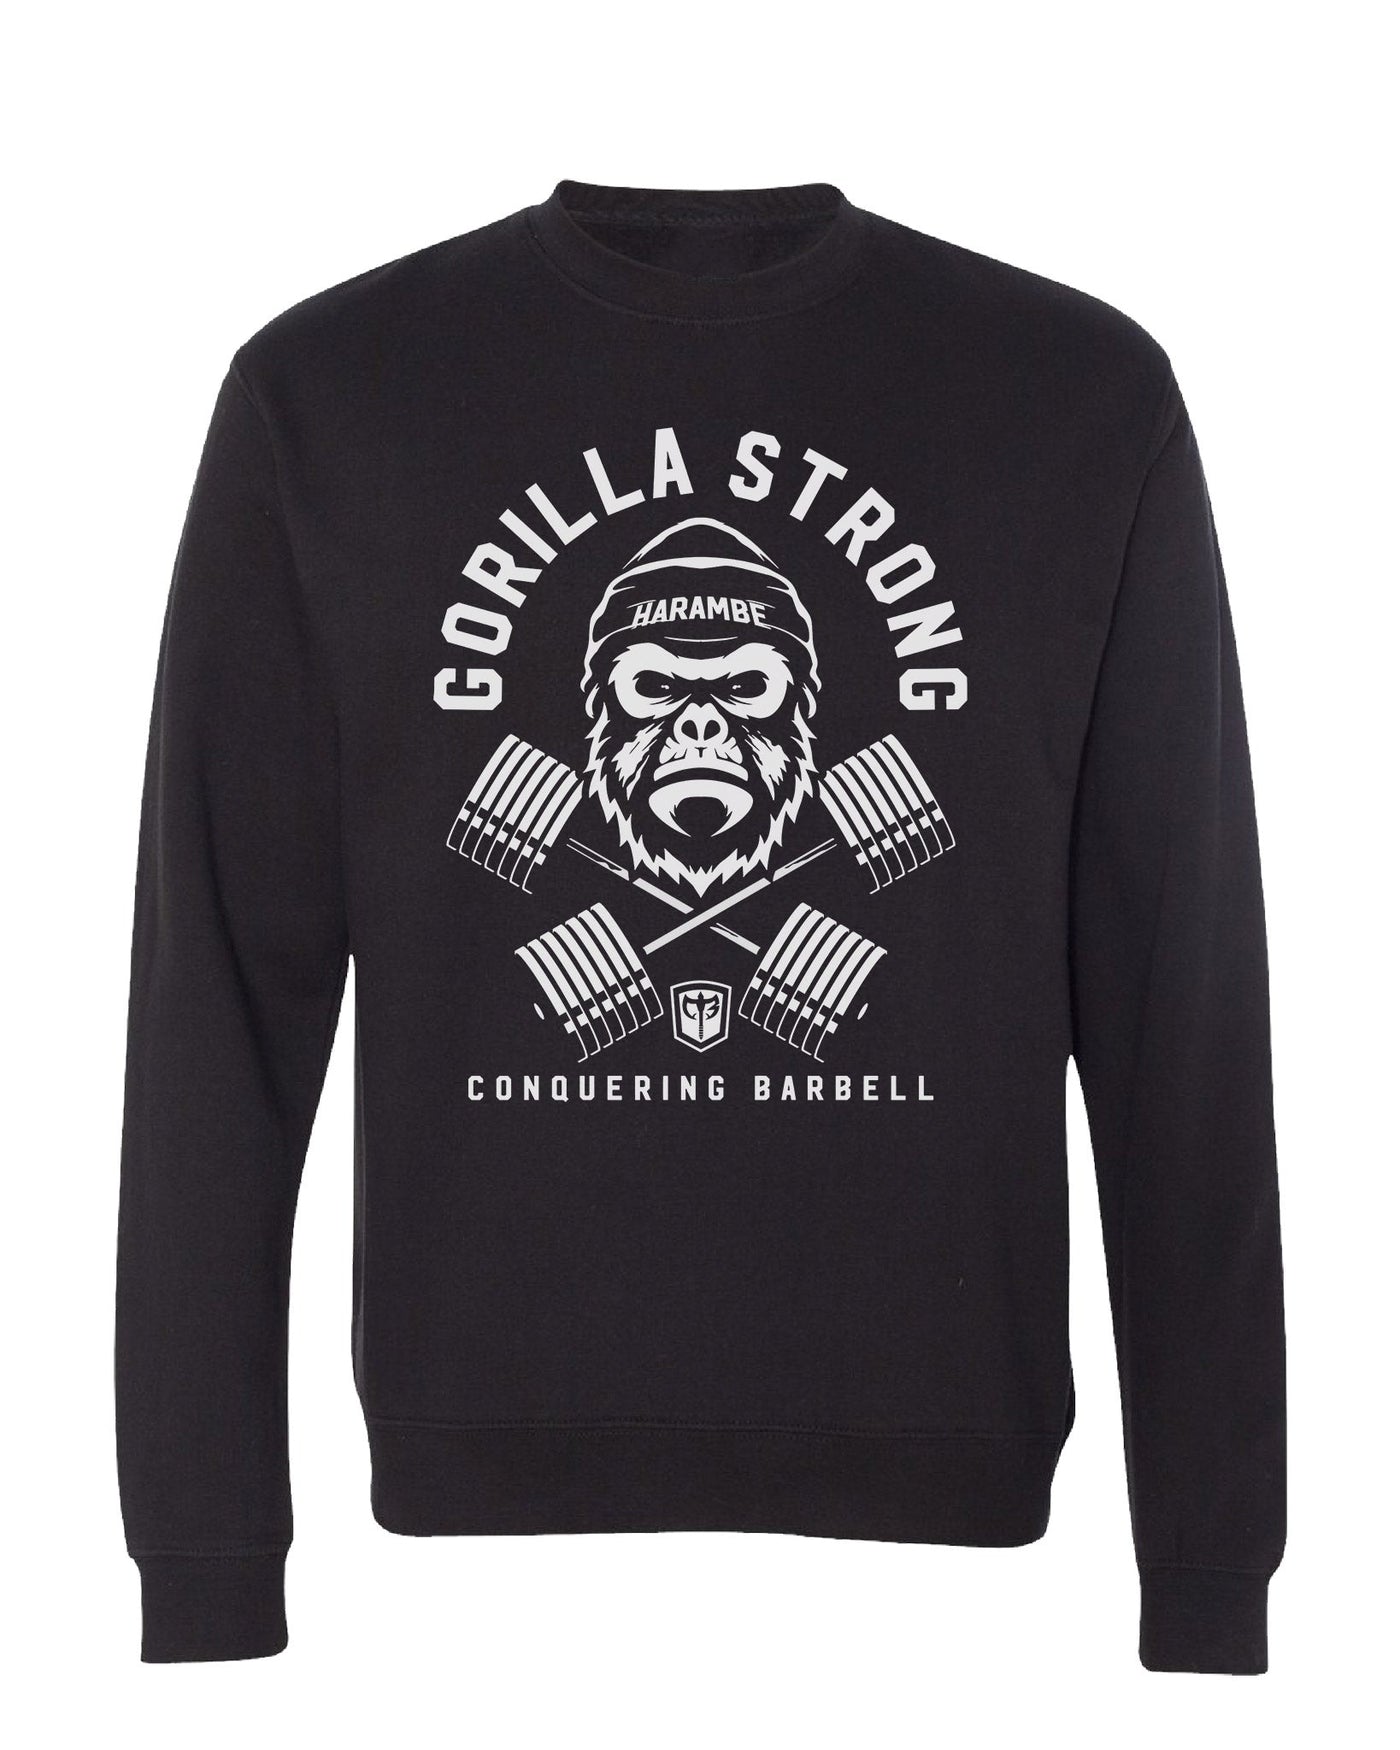 Gorilla Strong - Strong like Harambe - Crewneck - Conquering Barbell